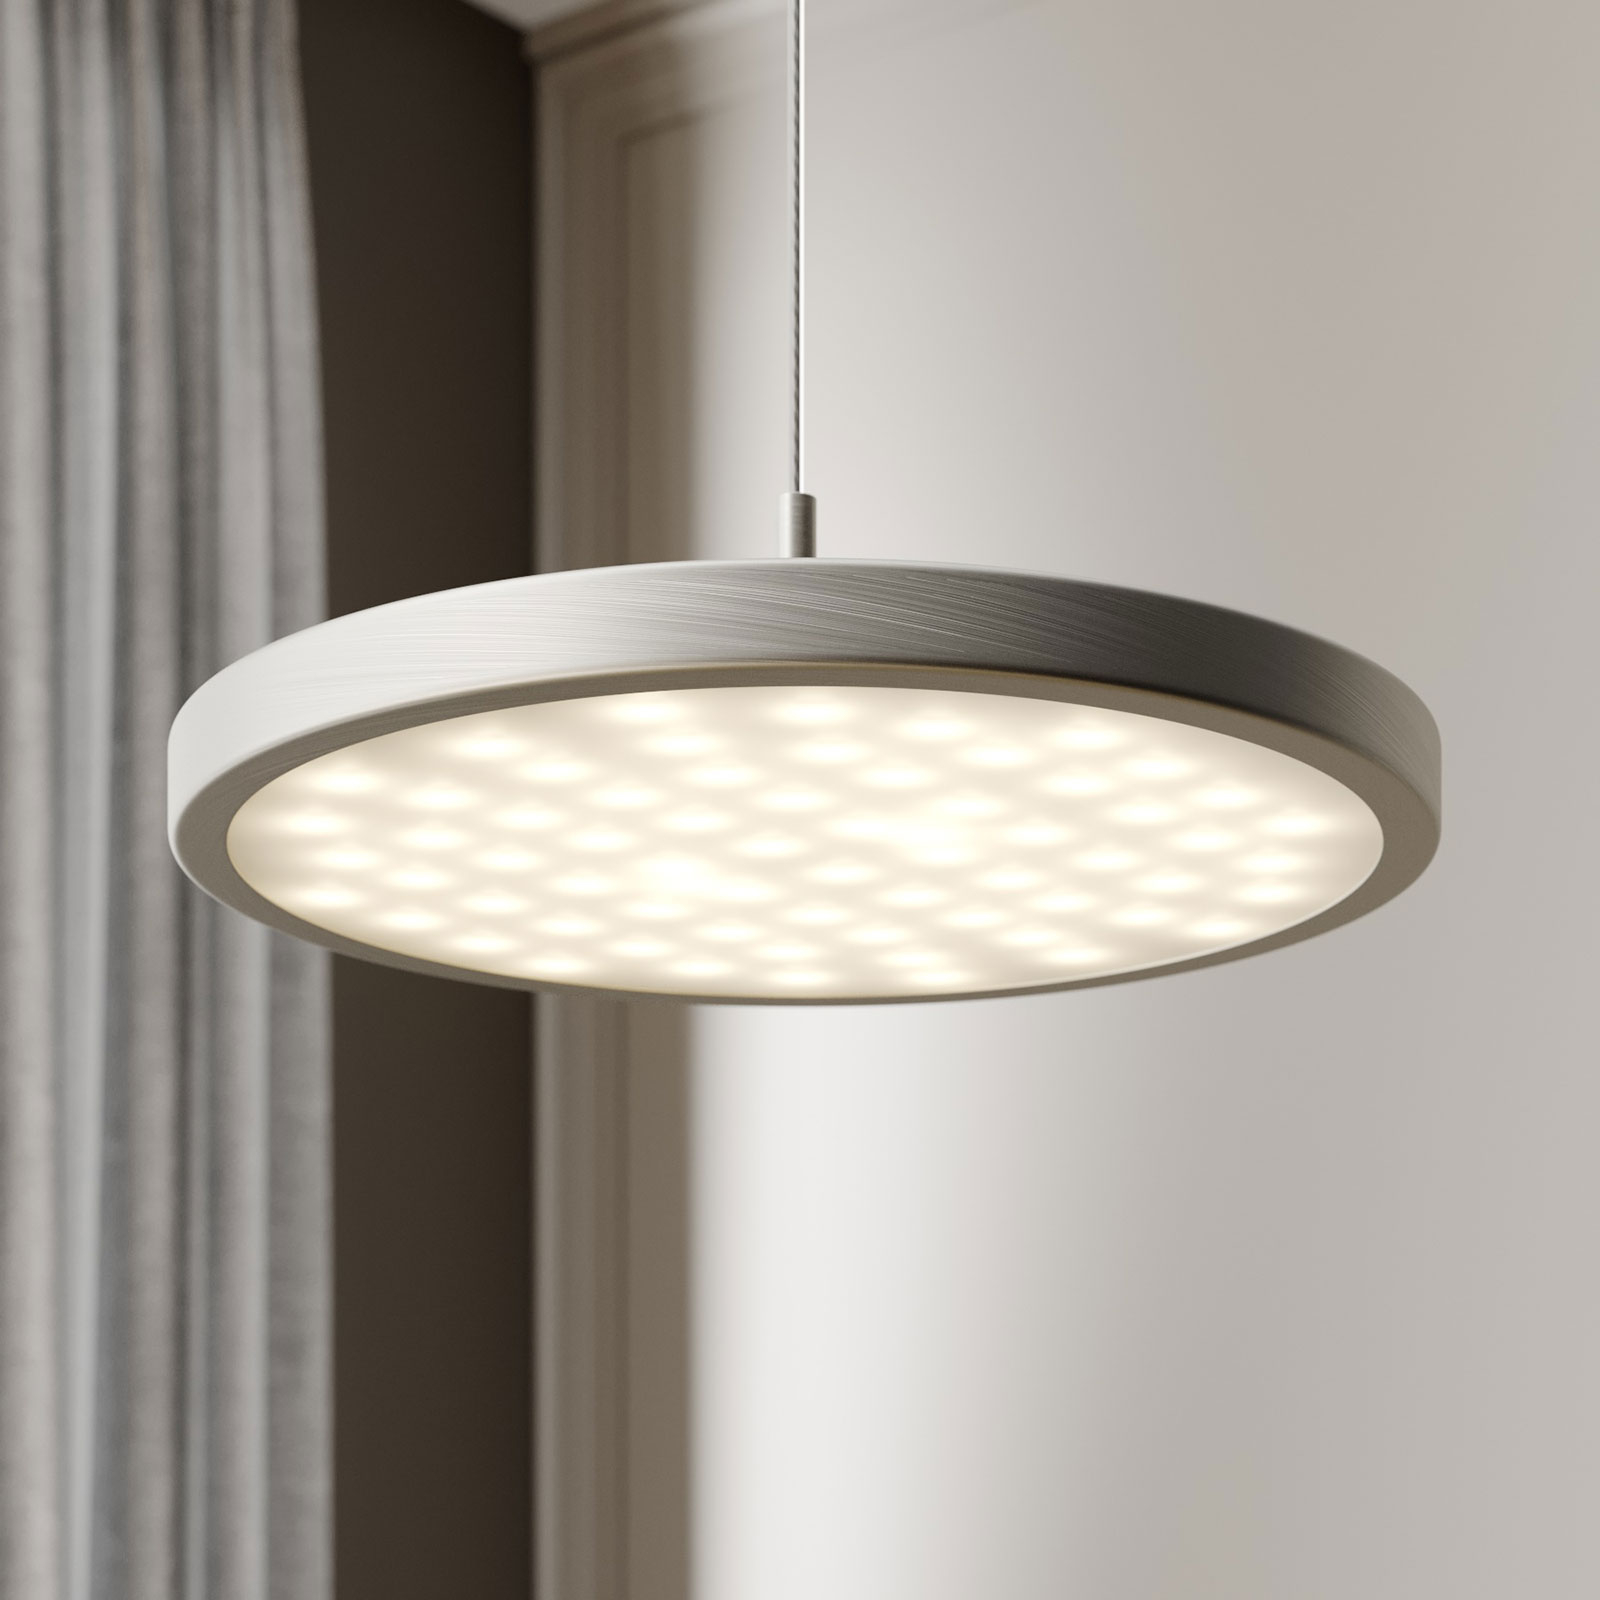 Rothfels Gion LED pendant light 1-bulb nickel/oak